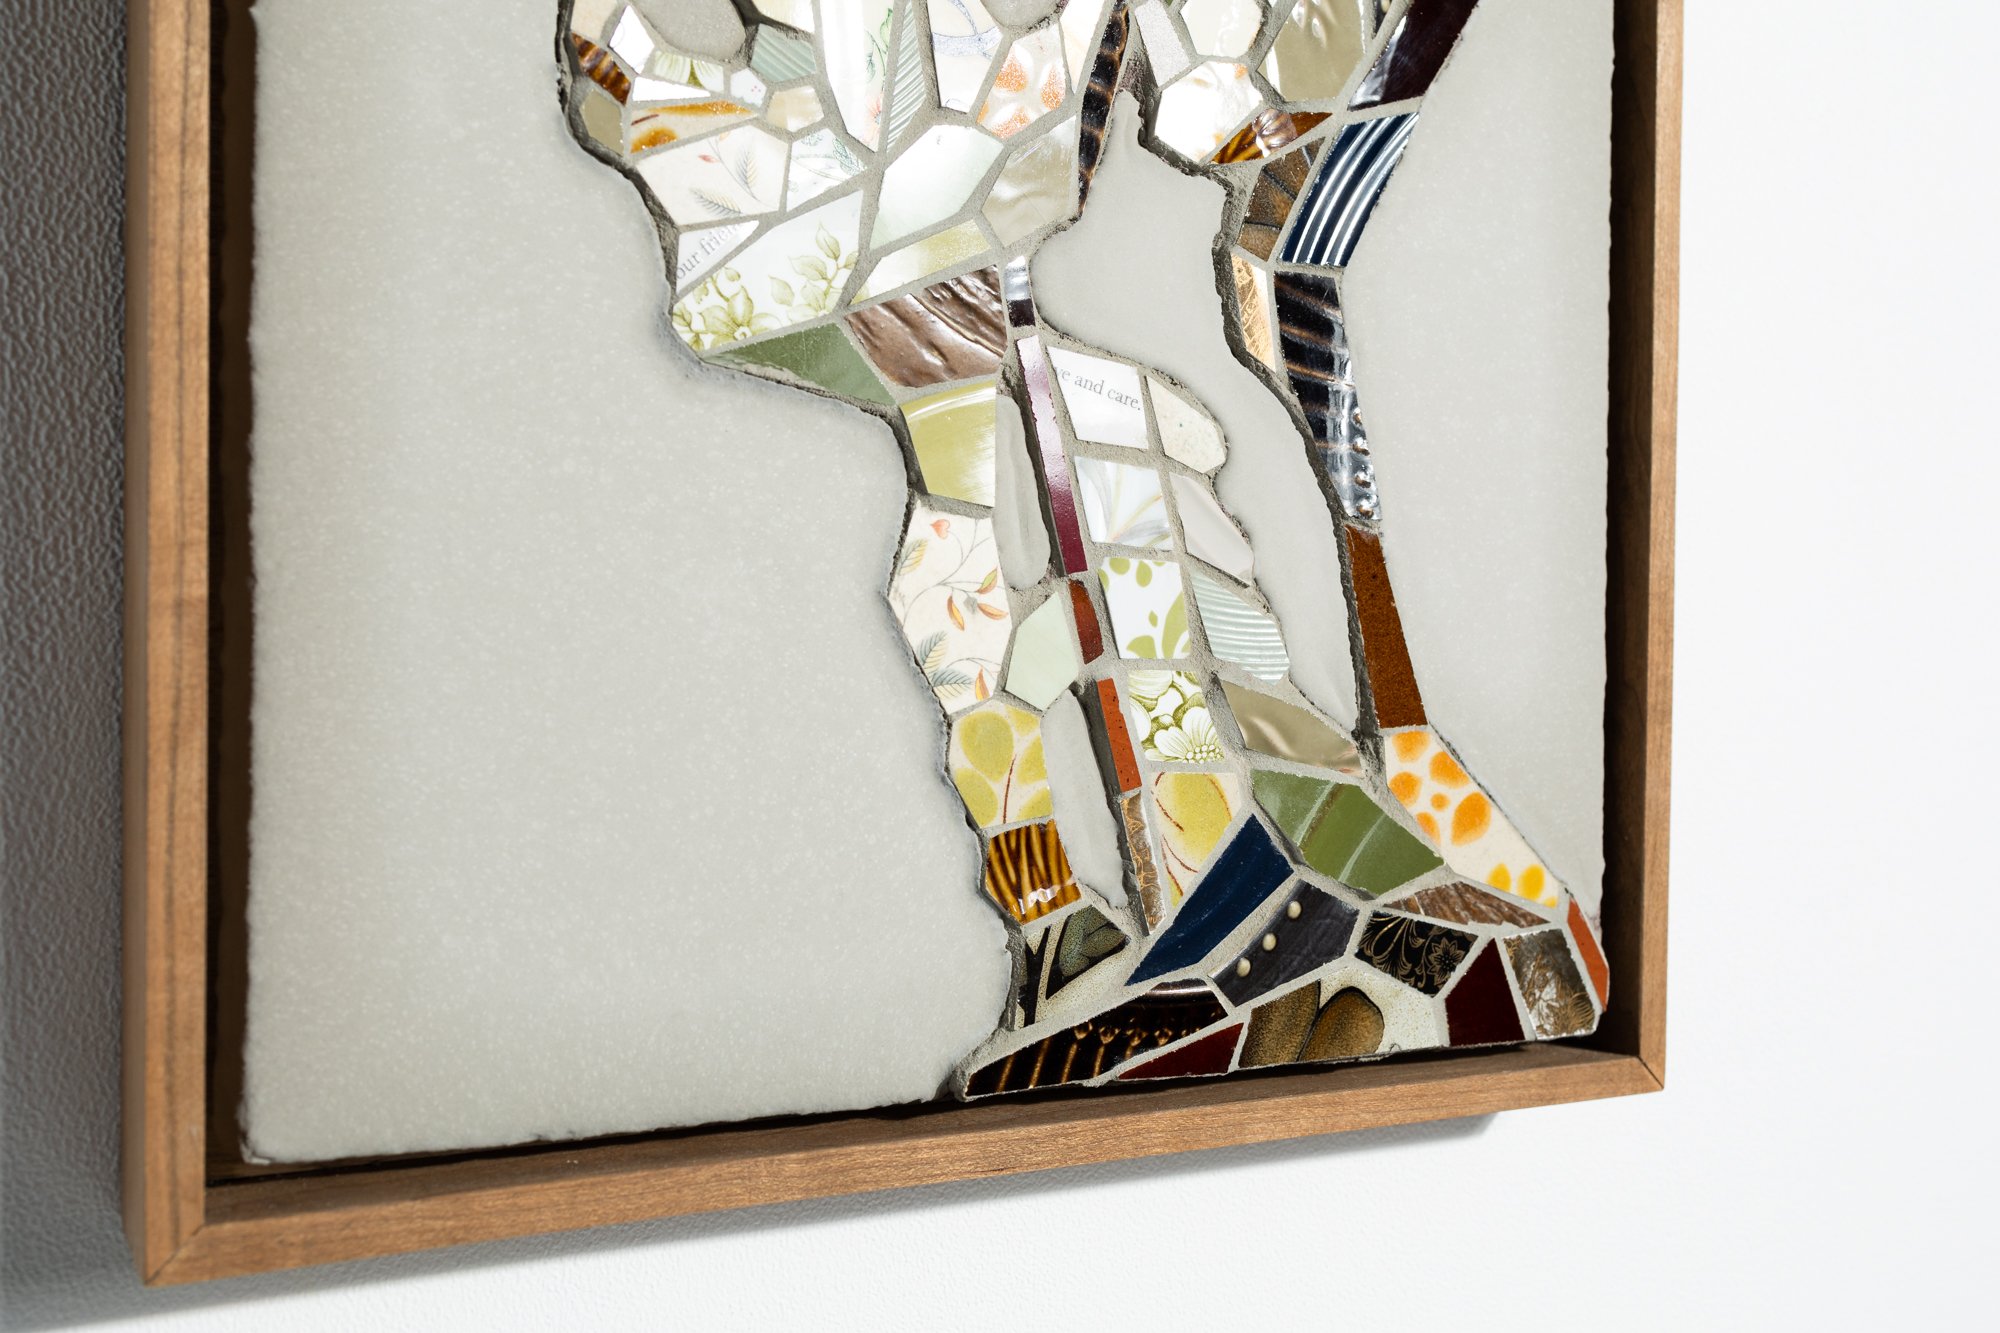 "Self Portrait, May 2021" Anatomical Mixed Media Mosaic by Mary Lacy @ Soapbox Arts Gallery, Burlington, Vermont"A Knot" Mixed Media Mosaic by Mary Lacy @ Soapbox Arts Gallery, Burlington, Vermont